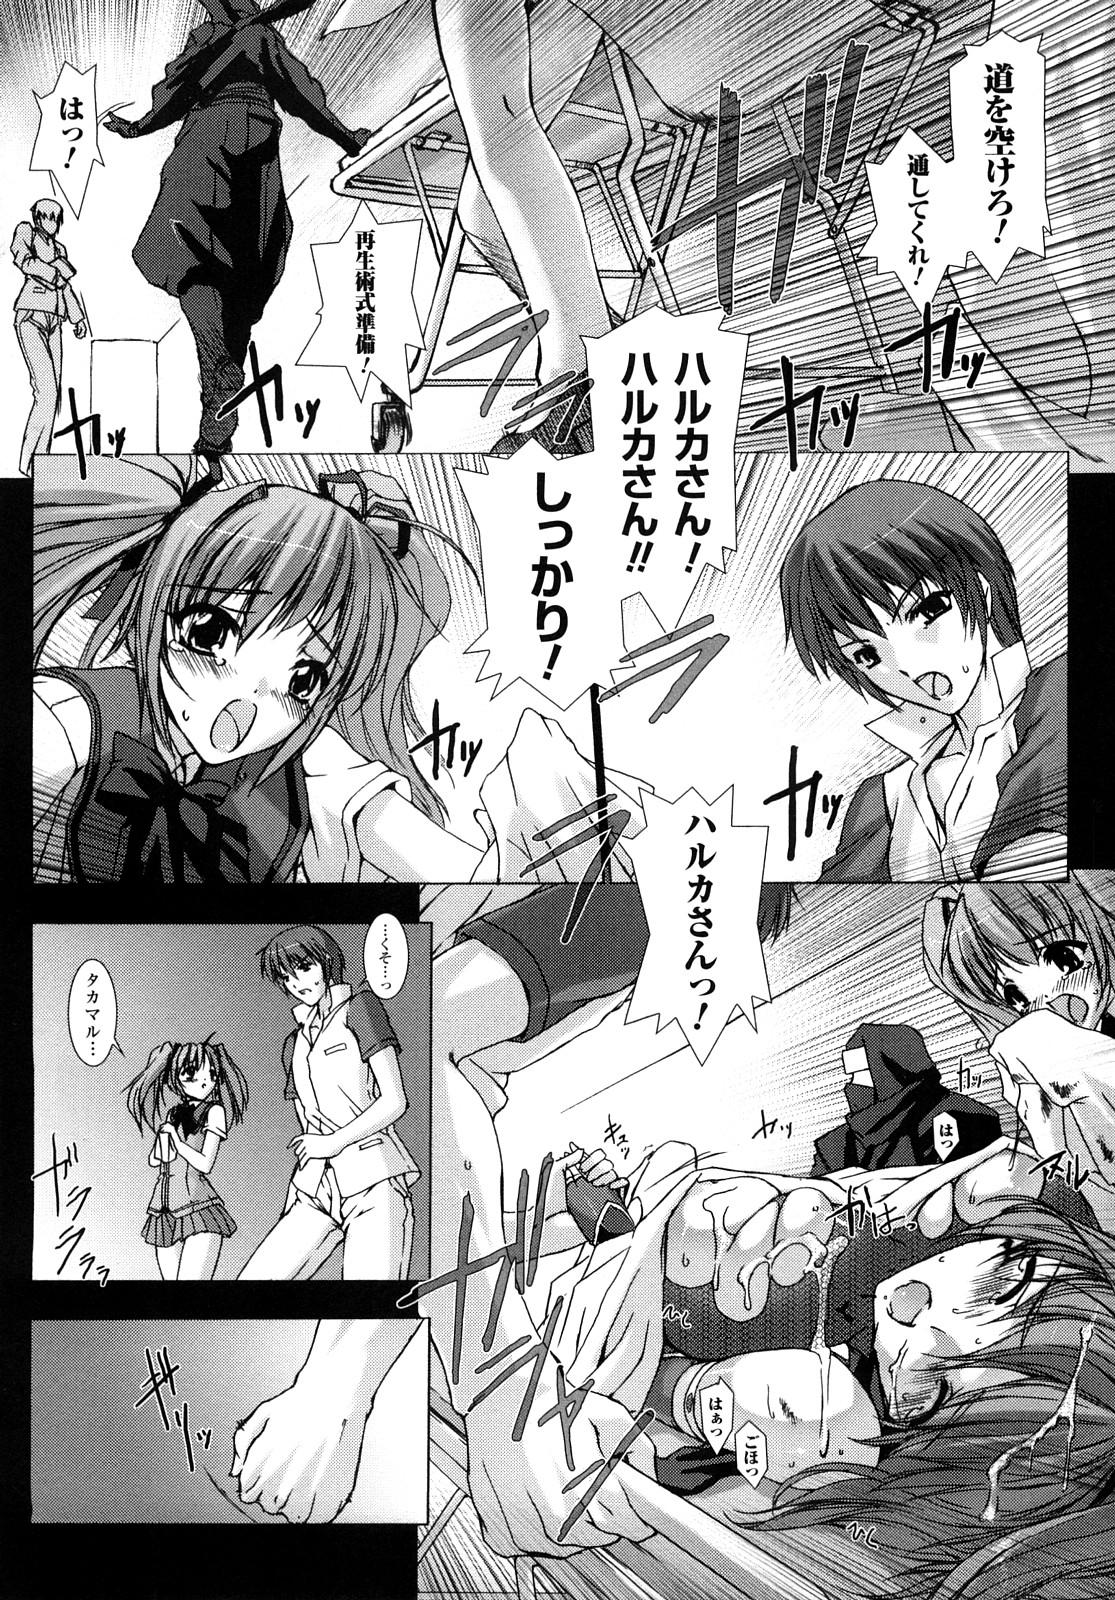 Softcore Choukousennin Haruka: Yaiba no Maki - Beat blades haruka Asiansex - Page 10